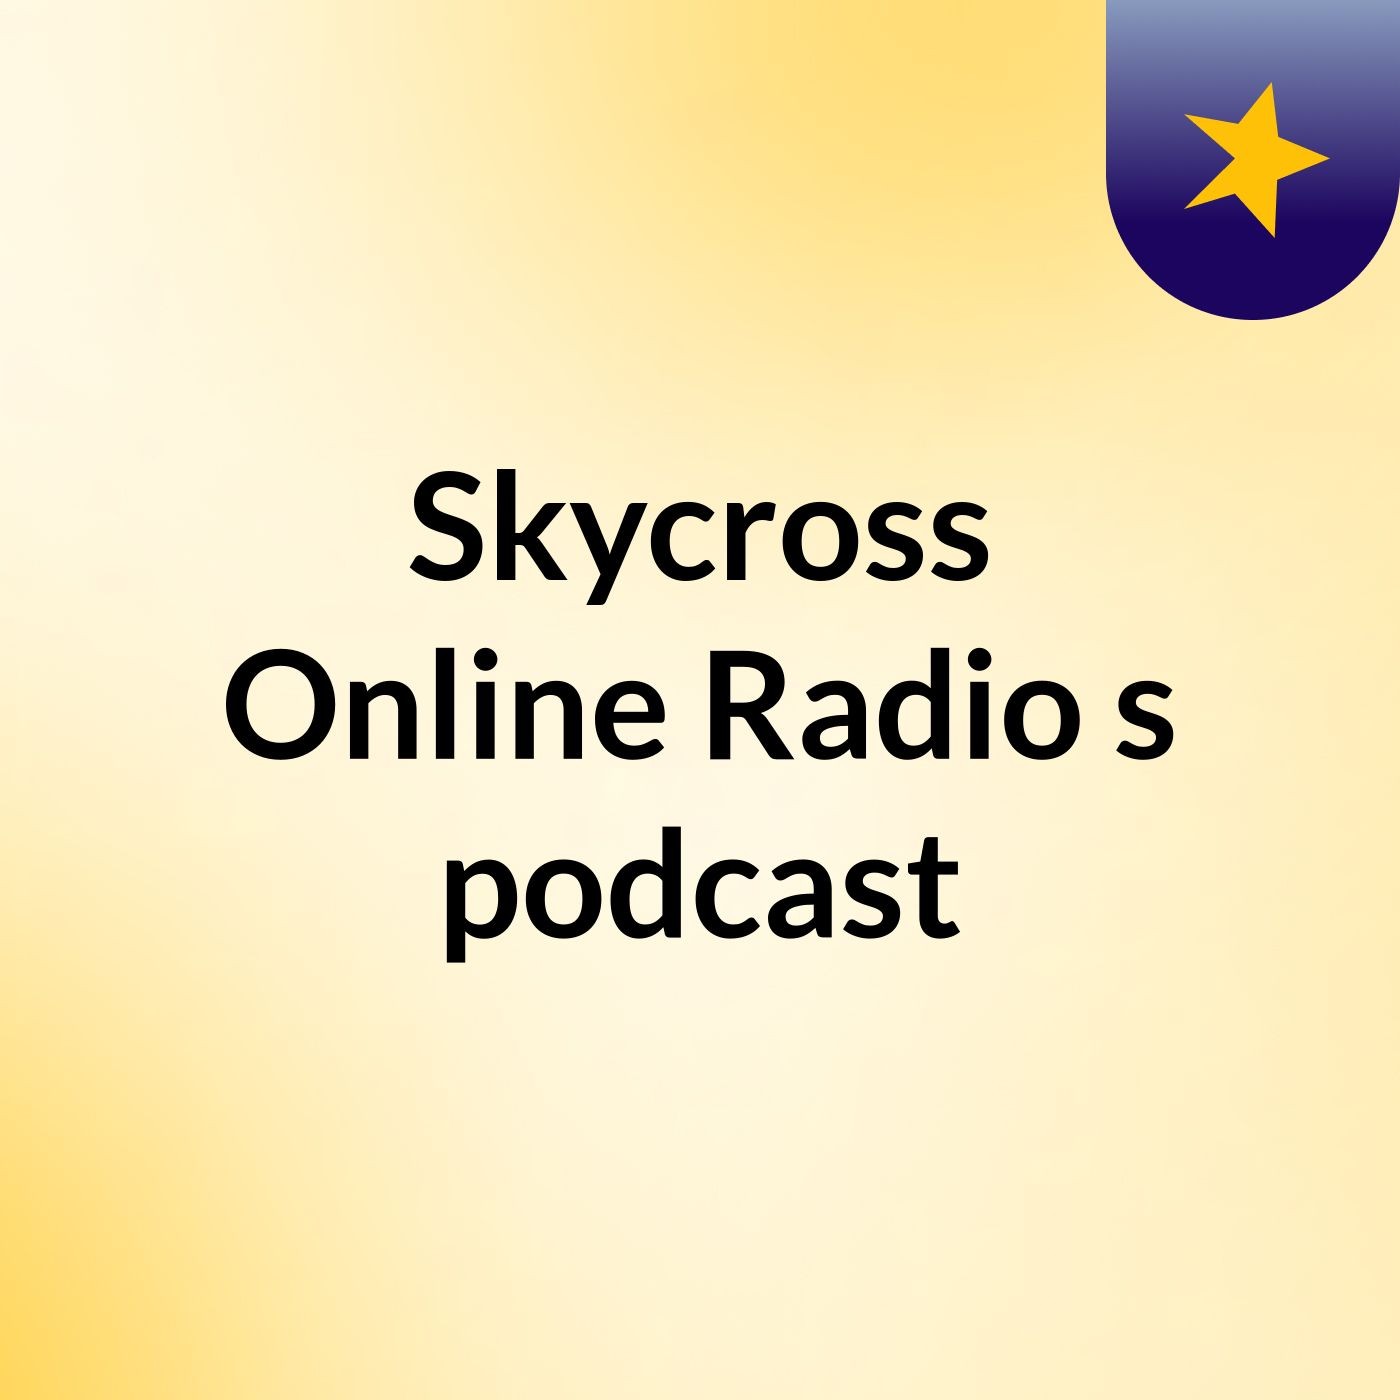 Episode 9 - Skycross Online Radio's podcast